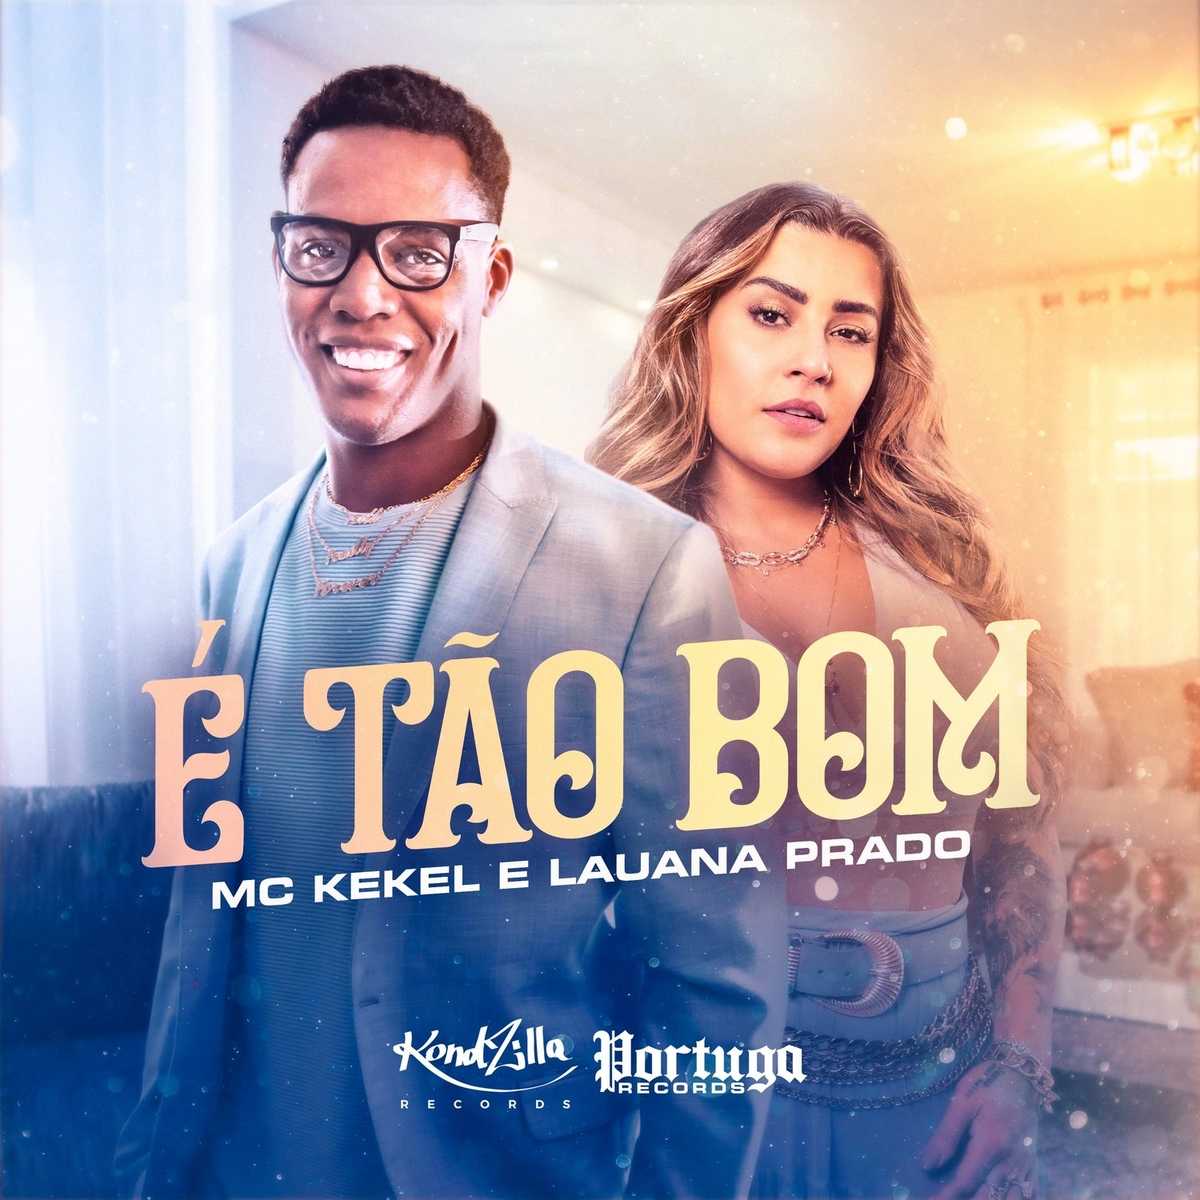 MC Kekel ft. Lauana Prado - e Tao Bom